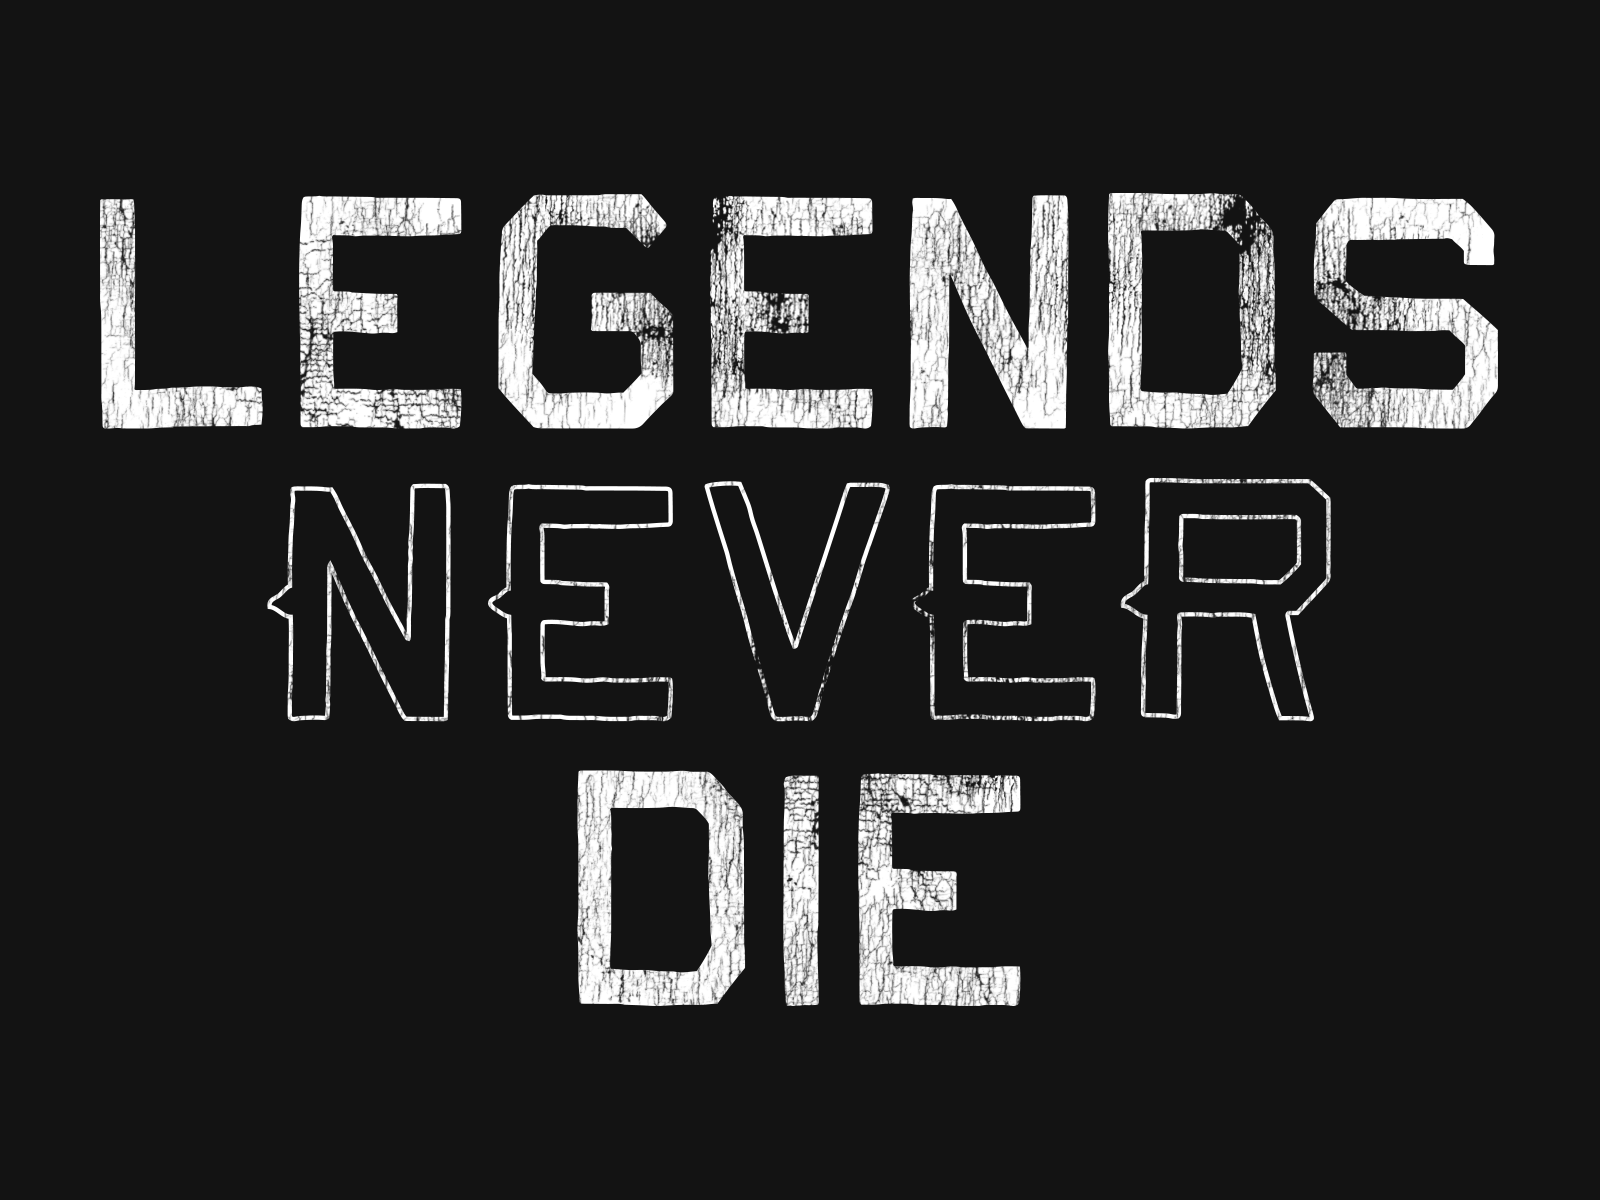 100+] Legends Never Die Wallpapers